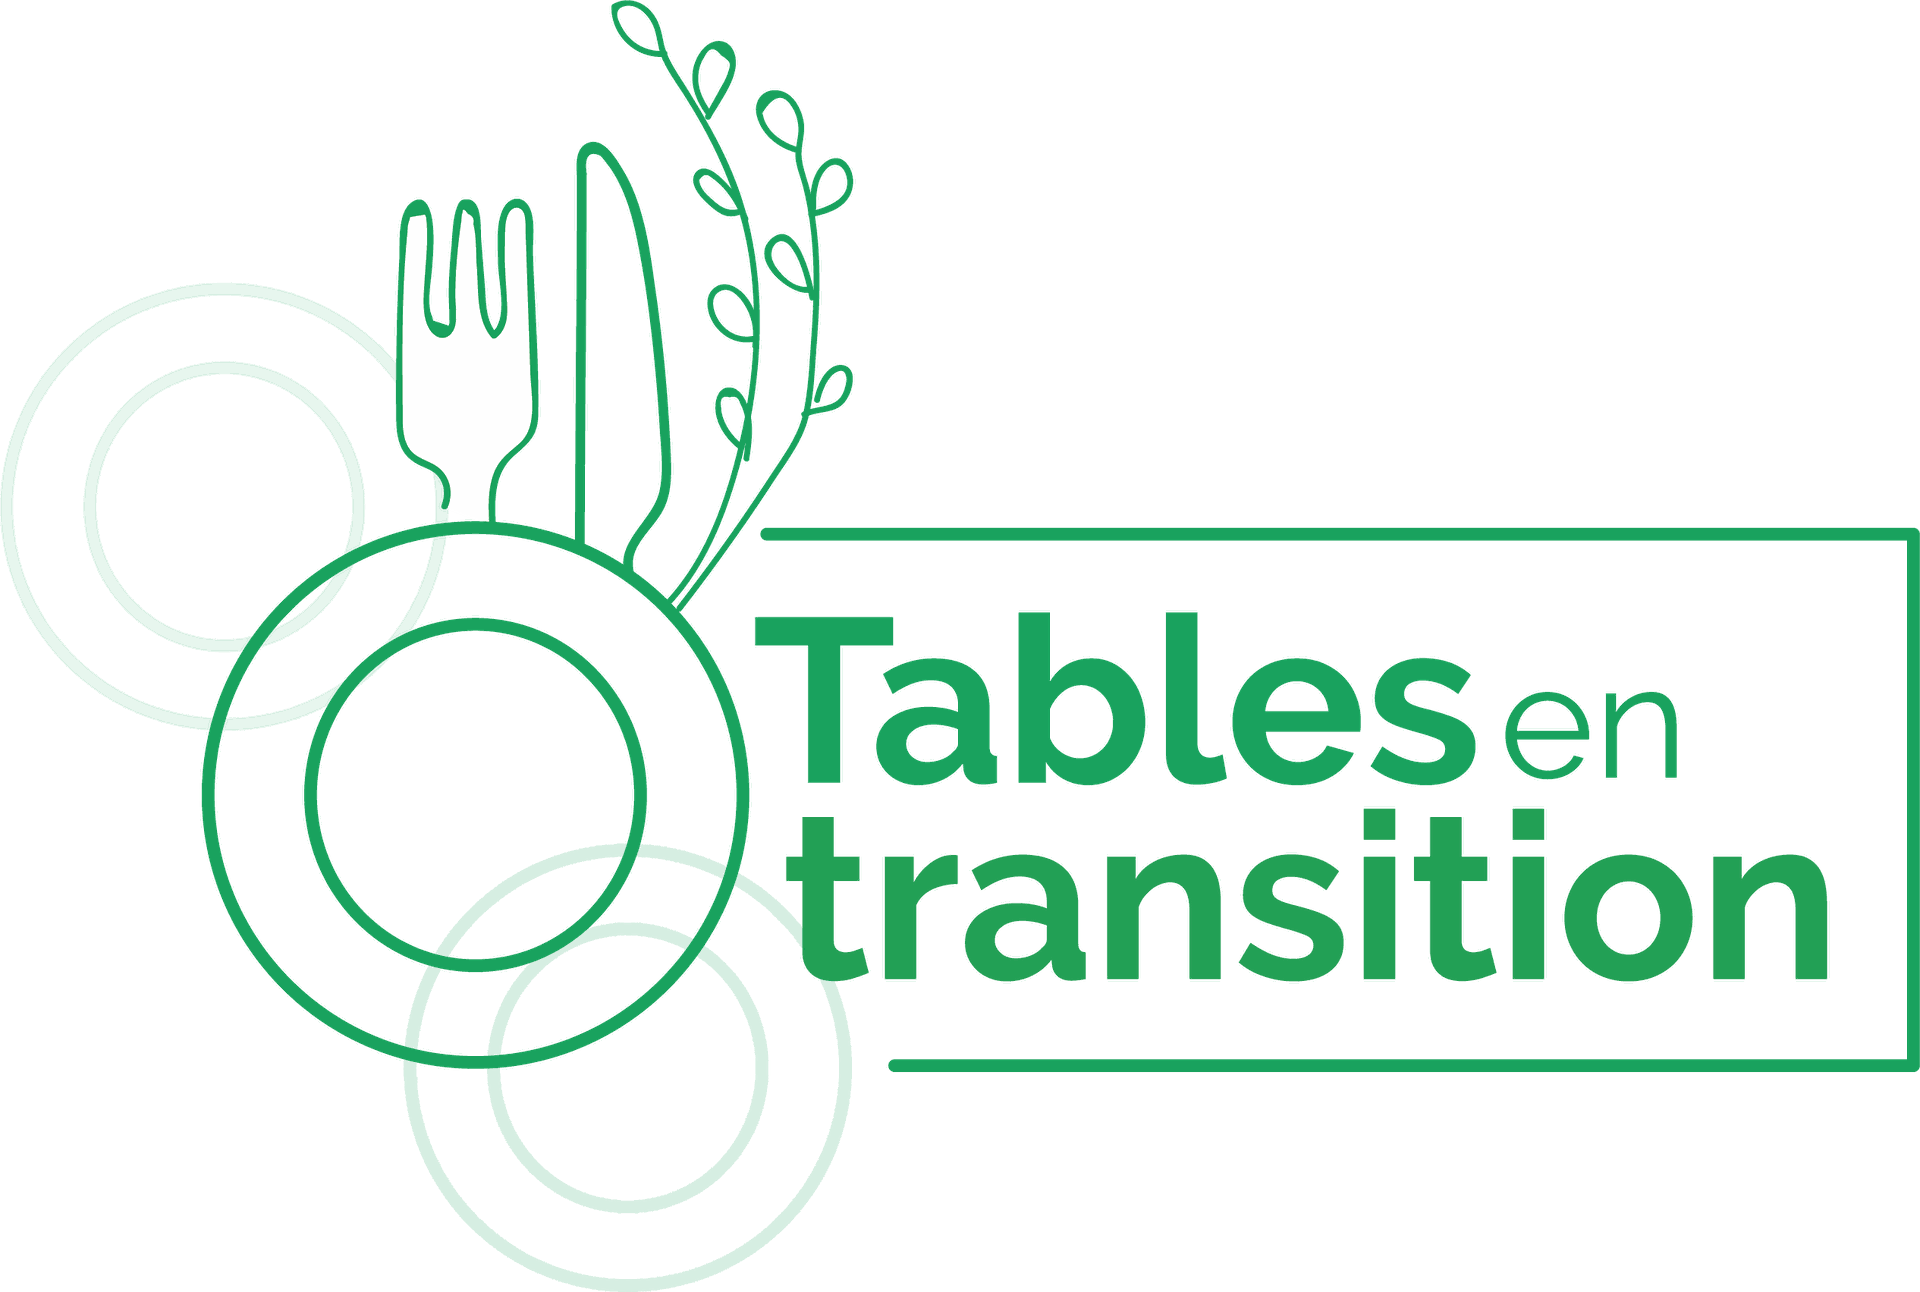 Tables en transition